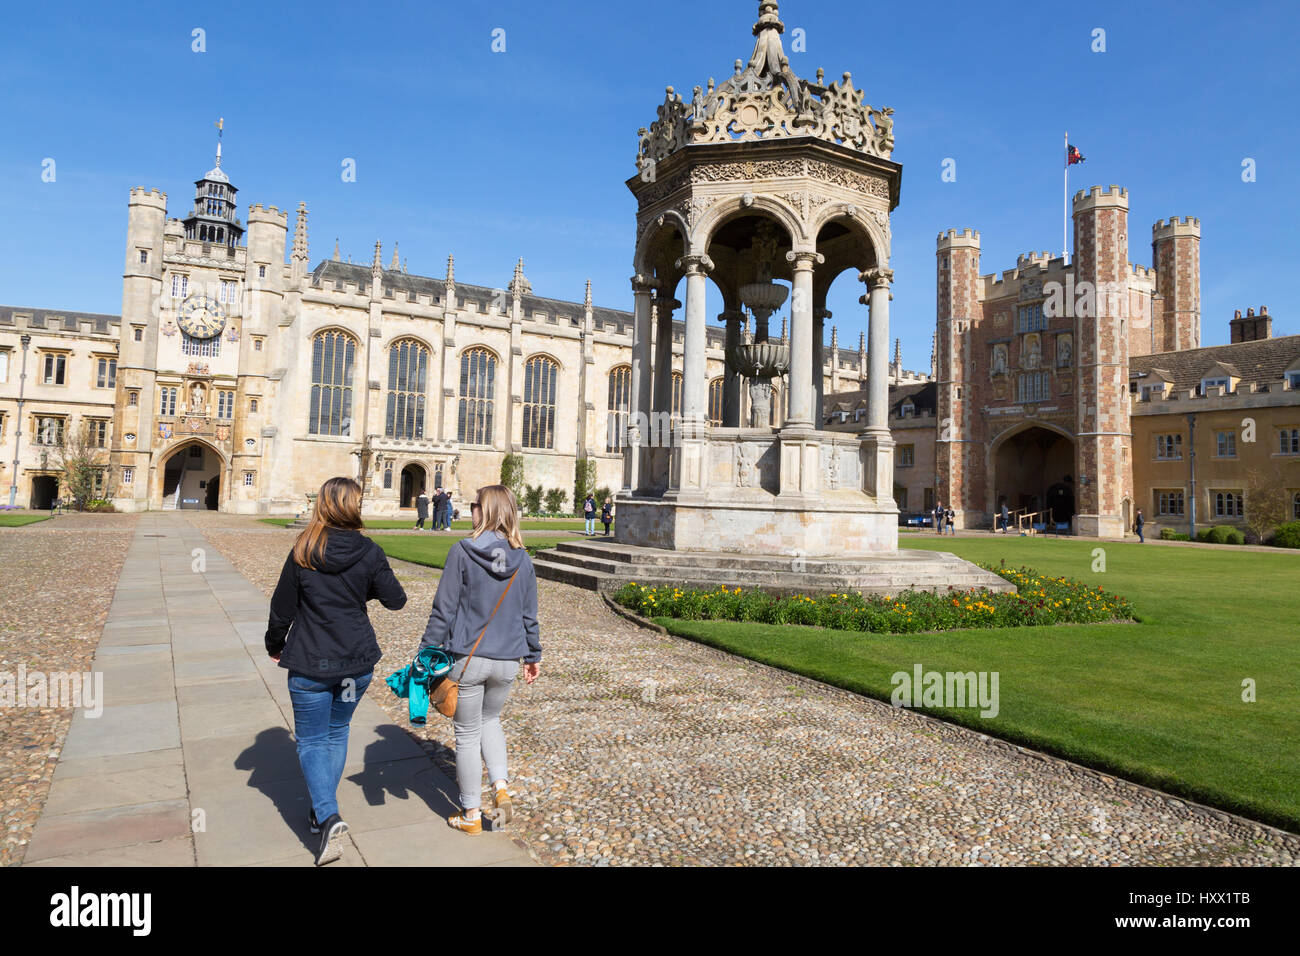 Trinity College Cambridge University - people walking in Great Court, Cambridge England, Cambridge UK Stock Photo